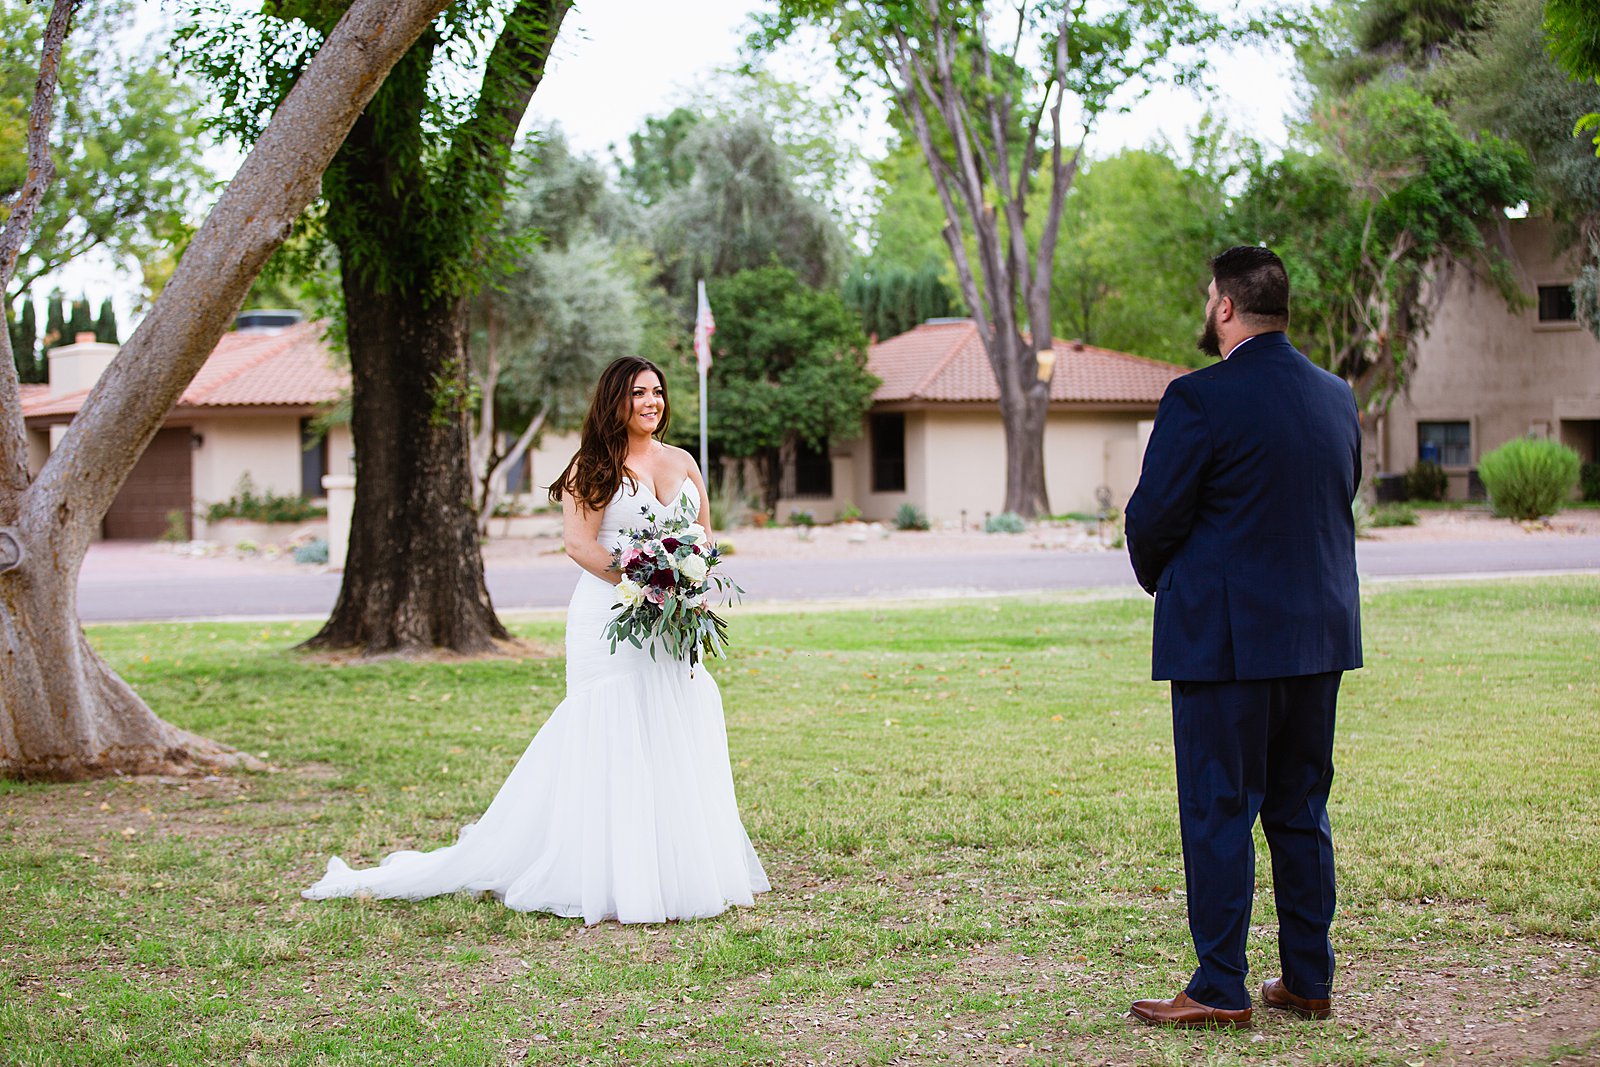 Bride and Groom's first look at Arizona backyard by Phoenix wedding photographer PMA Photography.